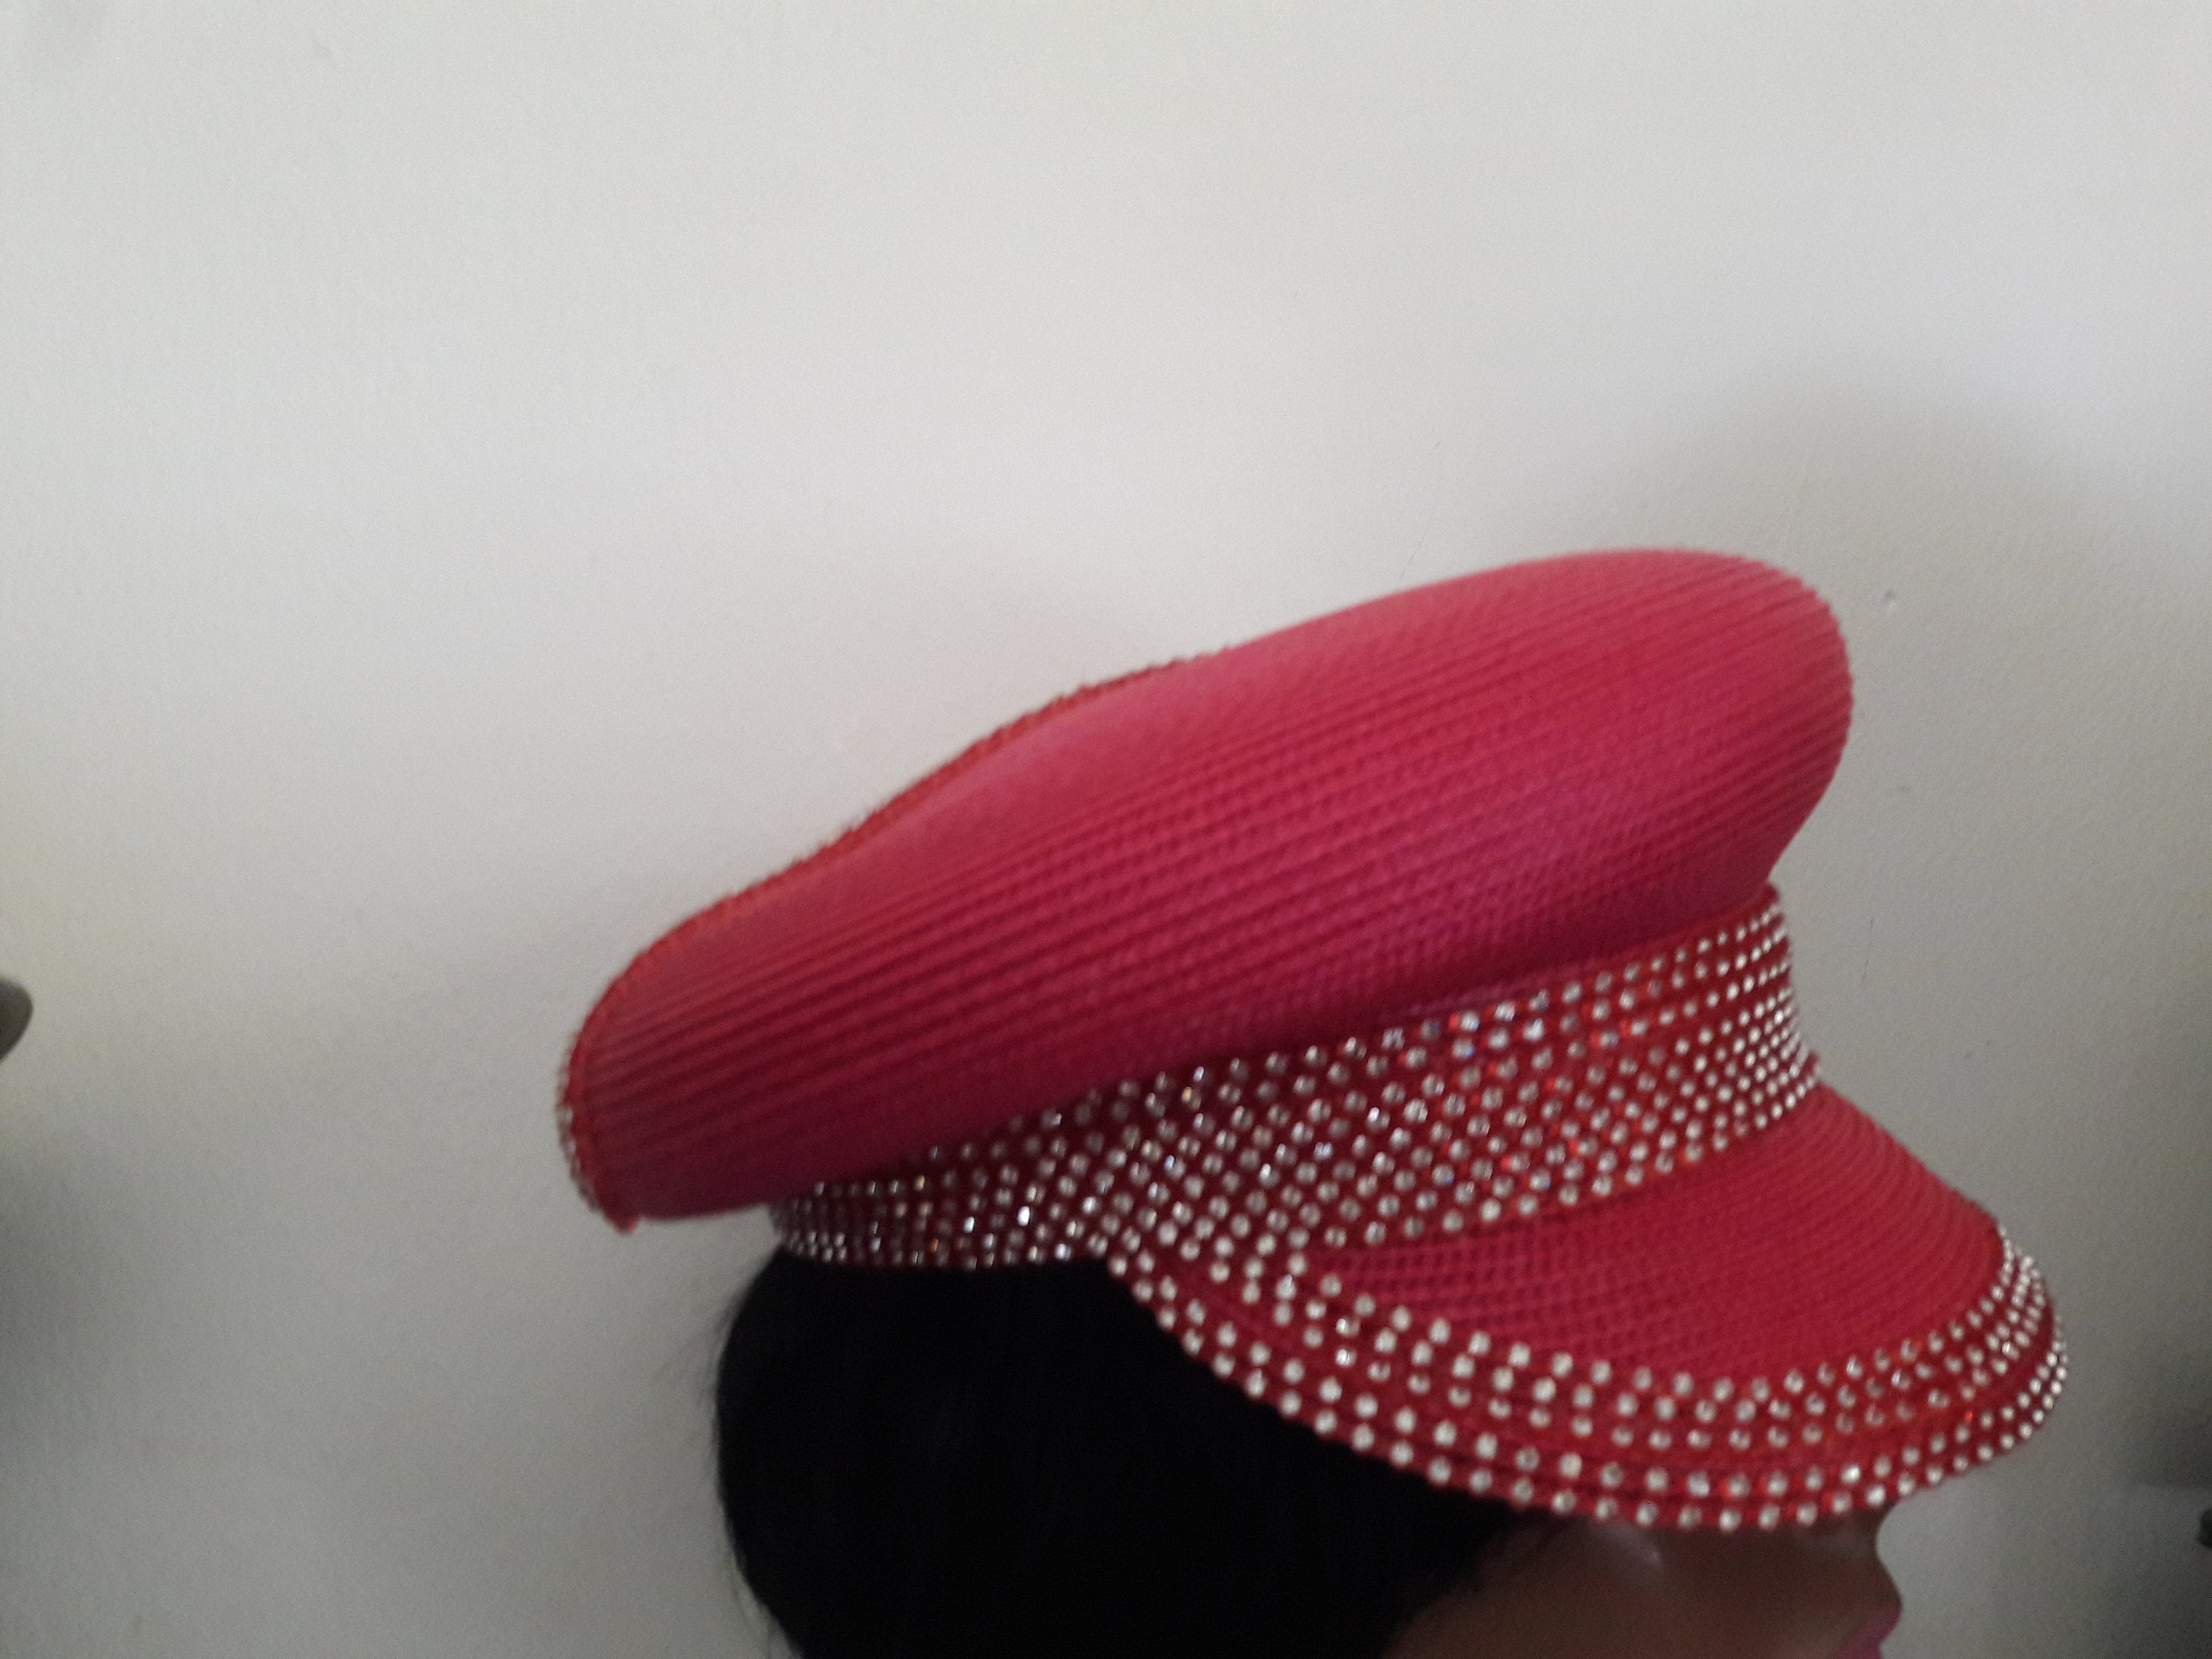 Satin rhinestone studded pillbox hat Accessoires Hoeden & petten Nette hoeden Pillbox hoeden 